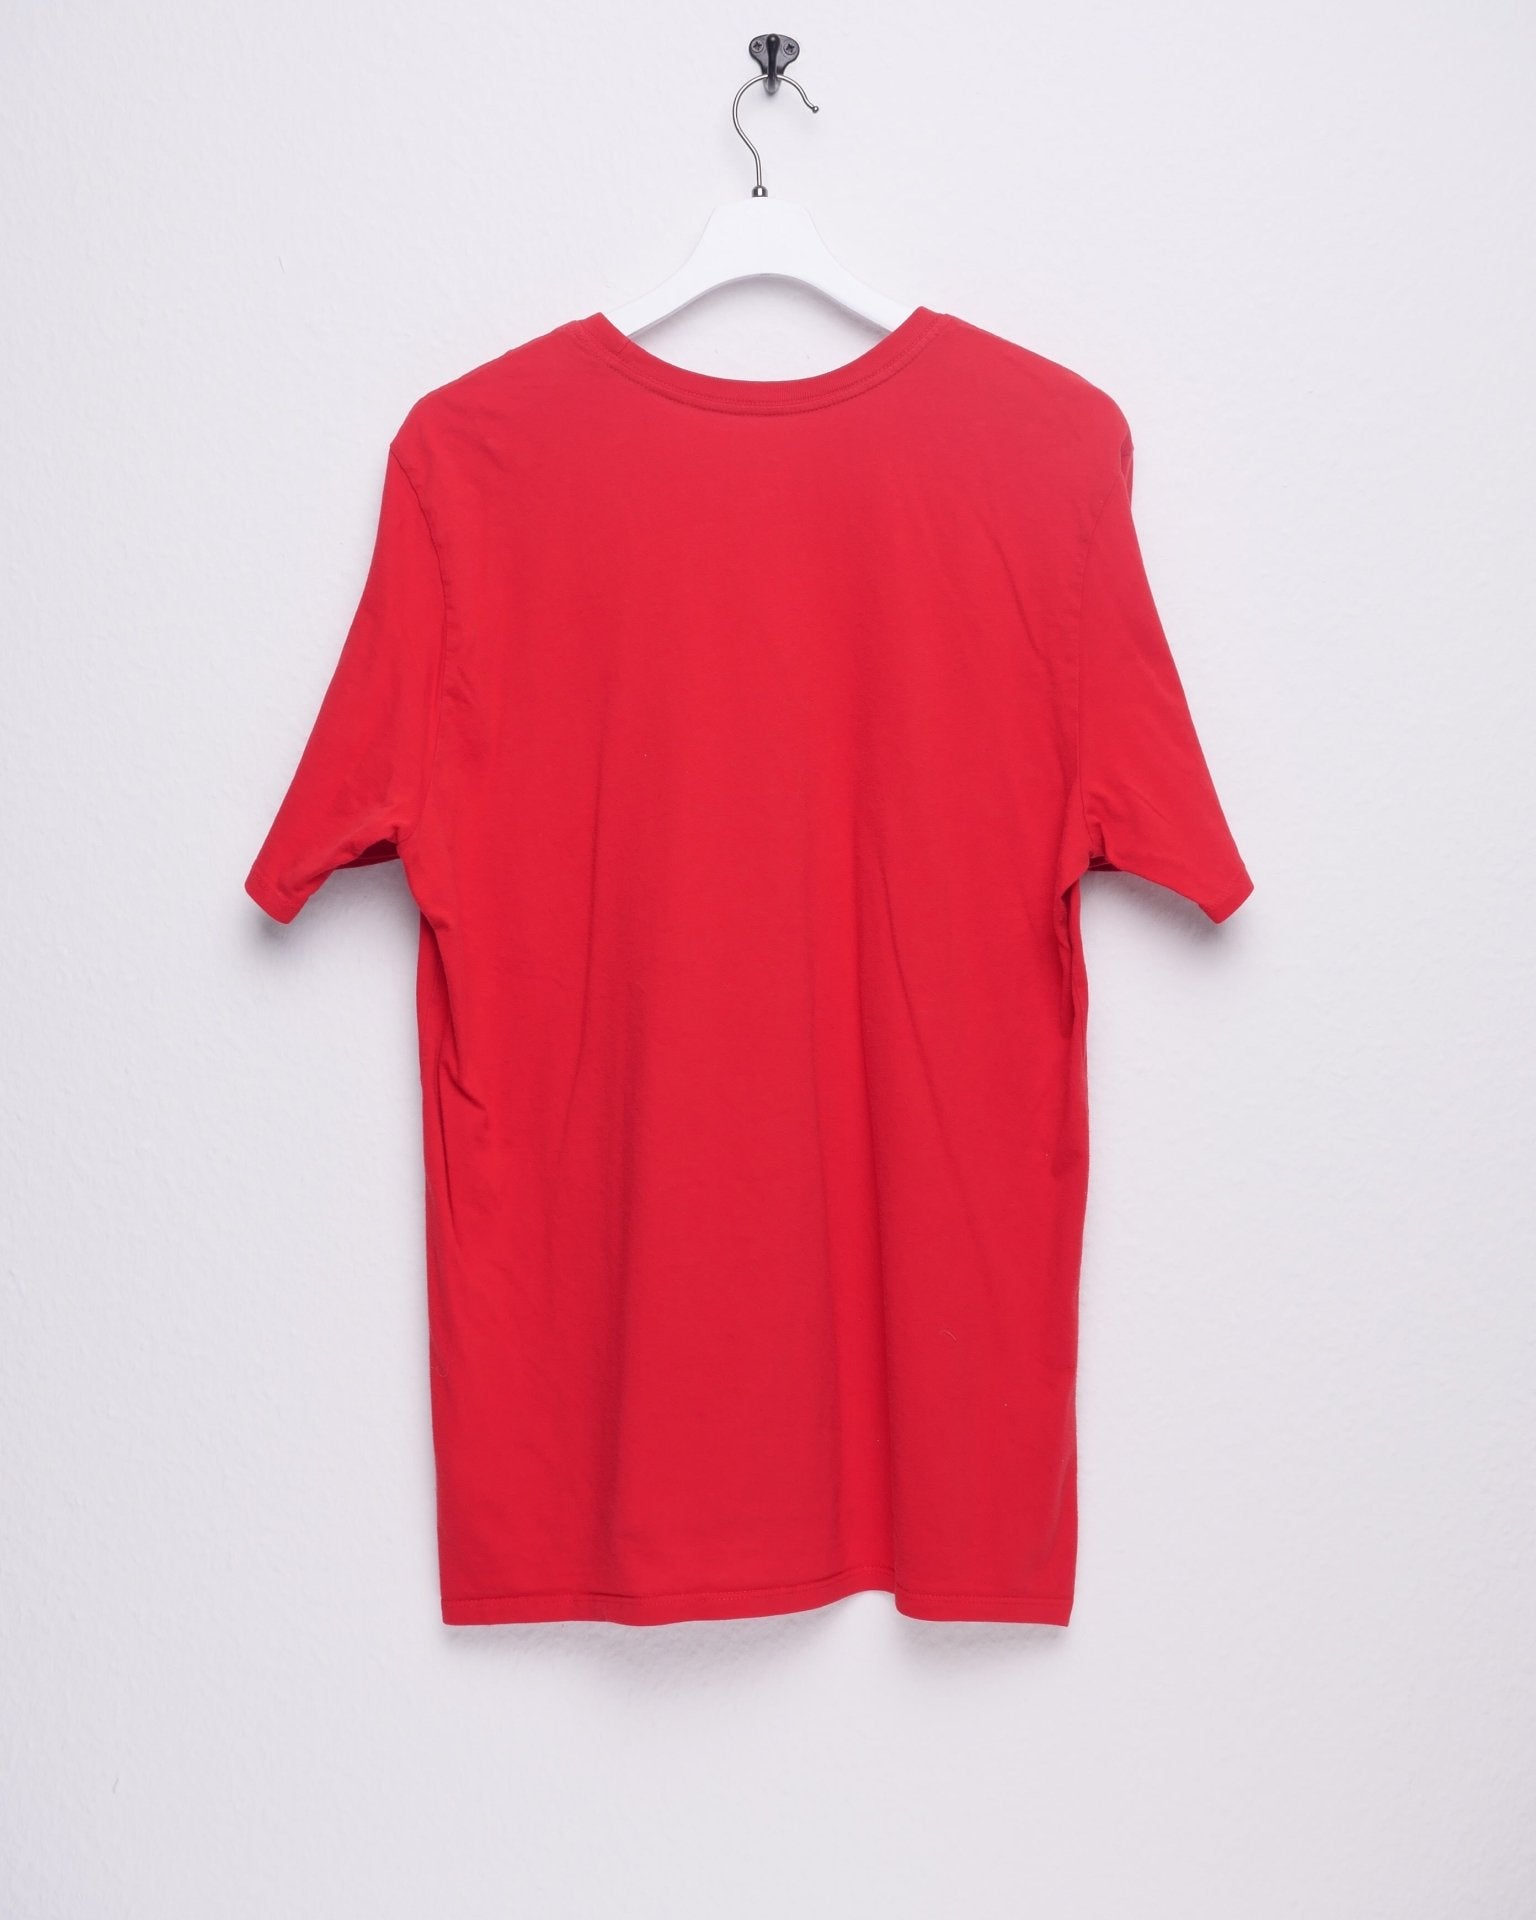 Nike printed Logo red Shirt - Peeces